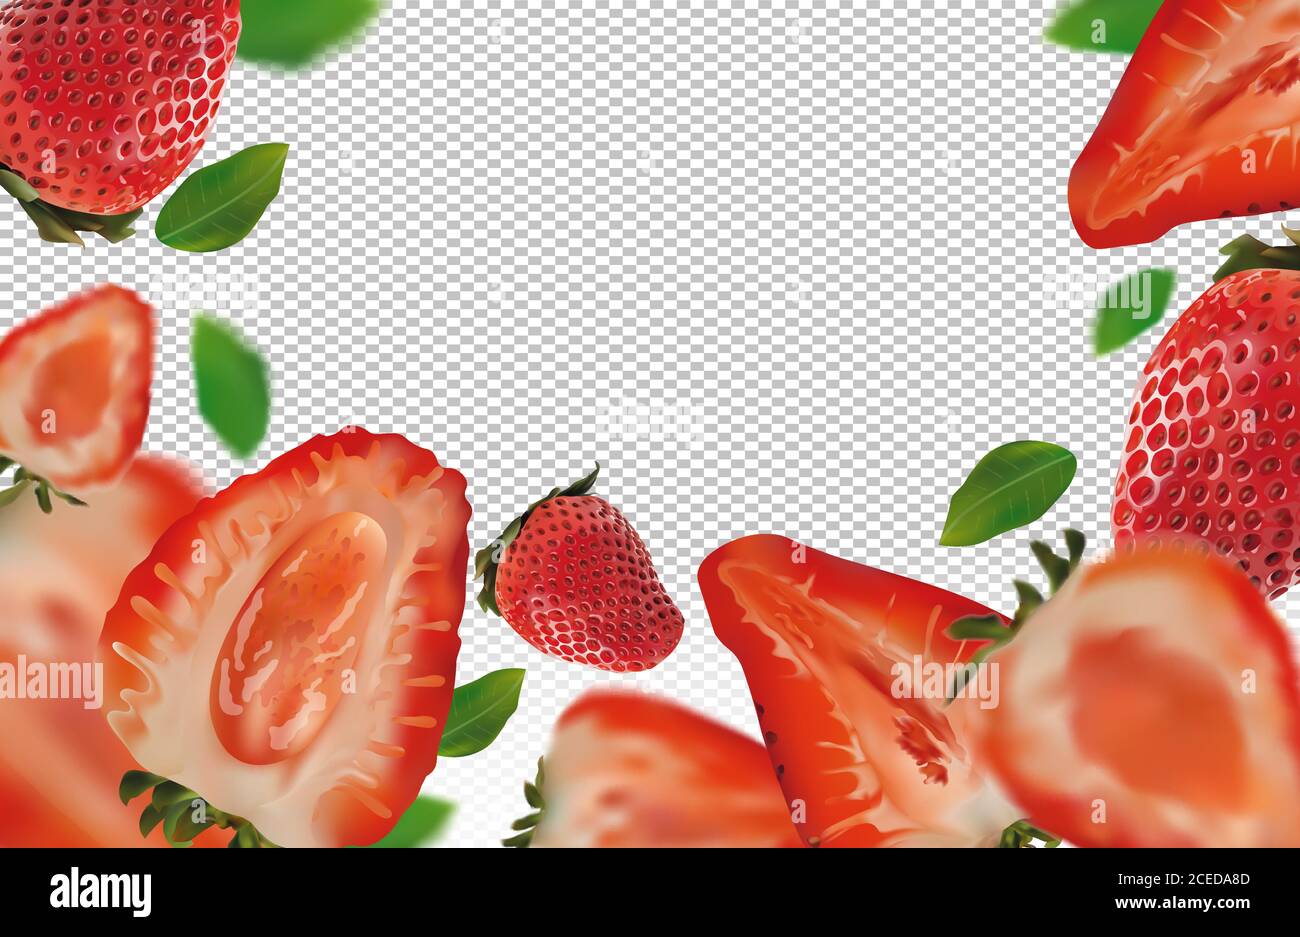 chopped strawberries transparent